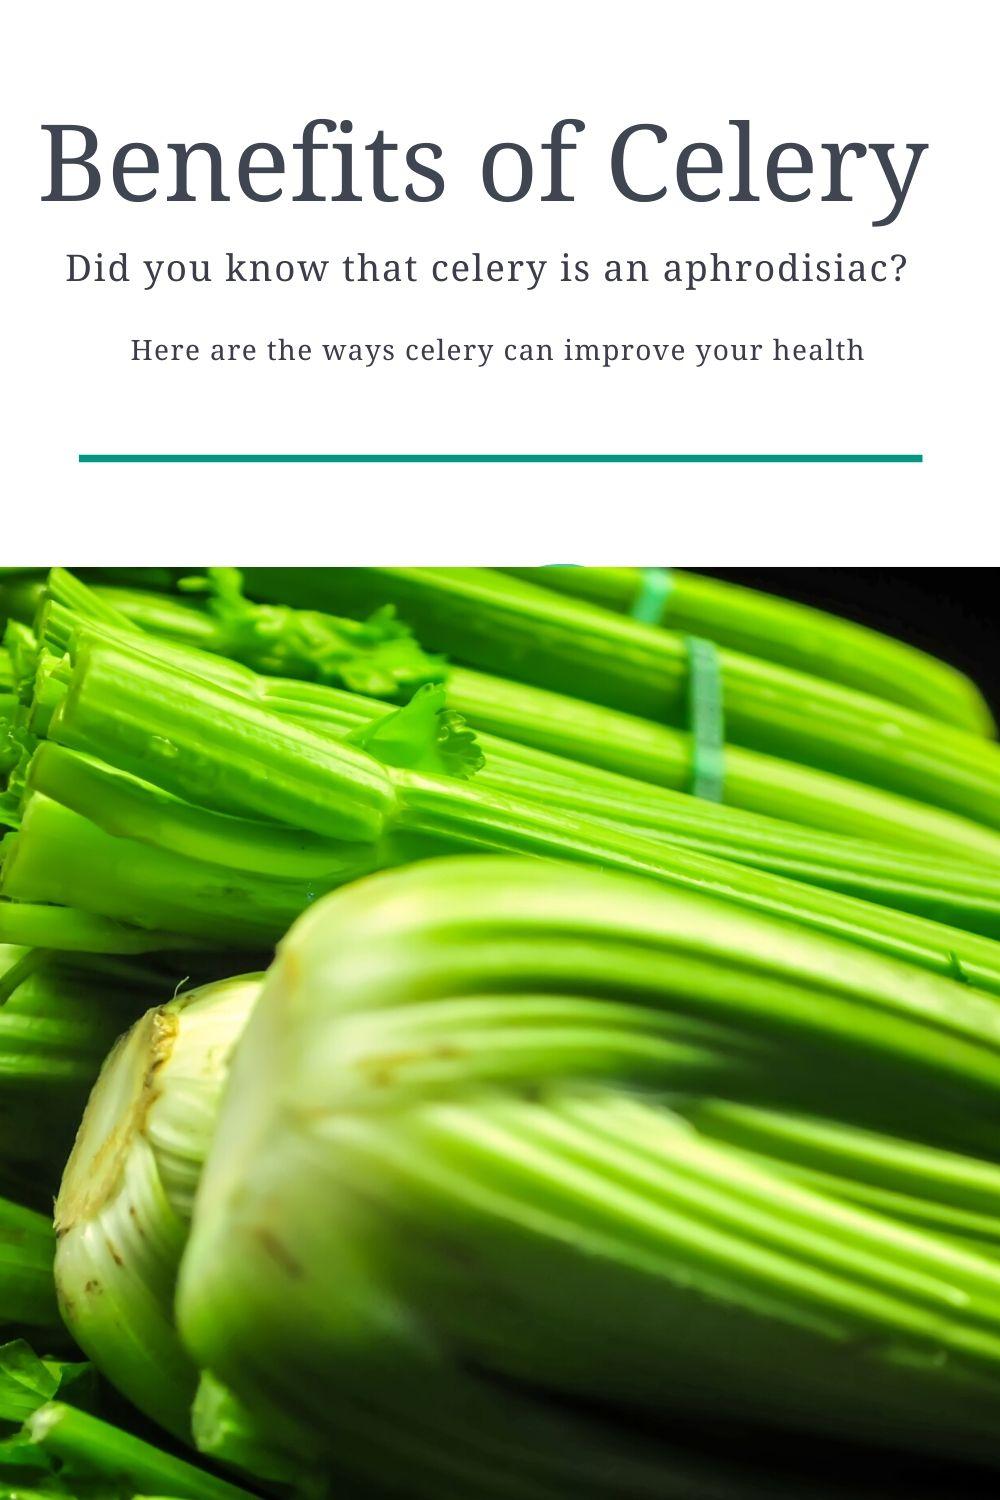 Benefits of celery graphic